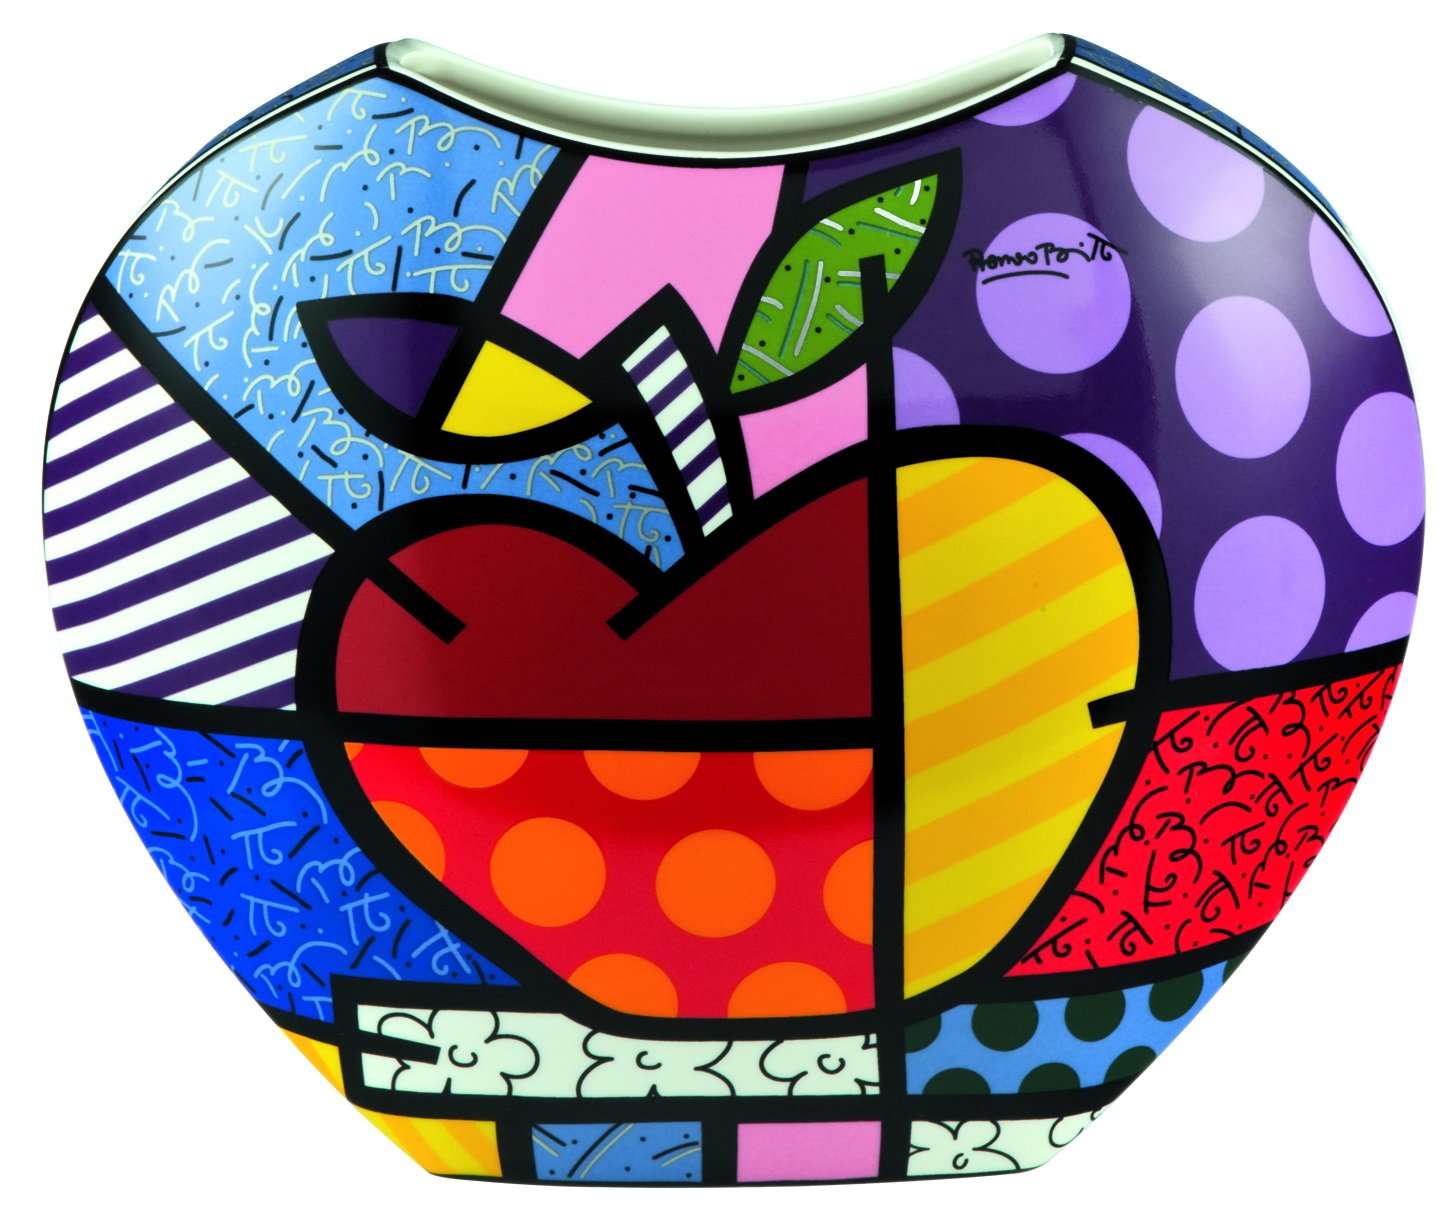 Goebel Artis Orbis Big Apple – Vase By Romero Britto